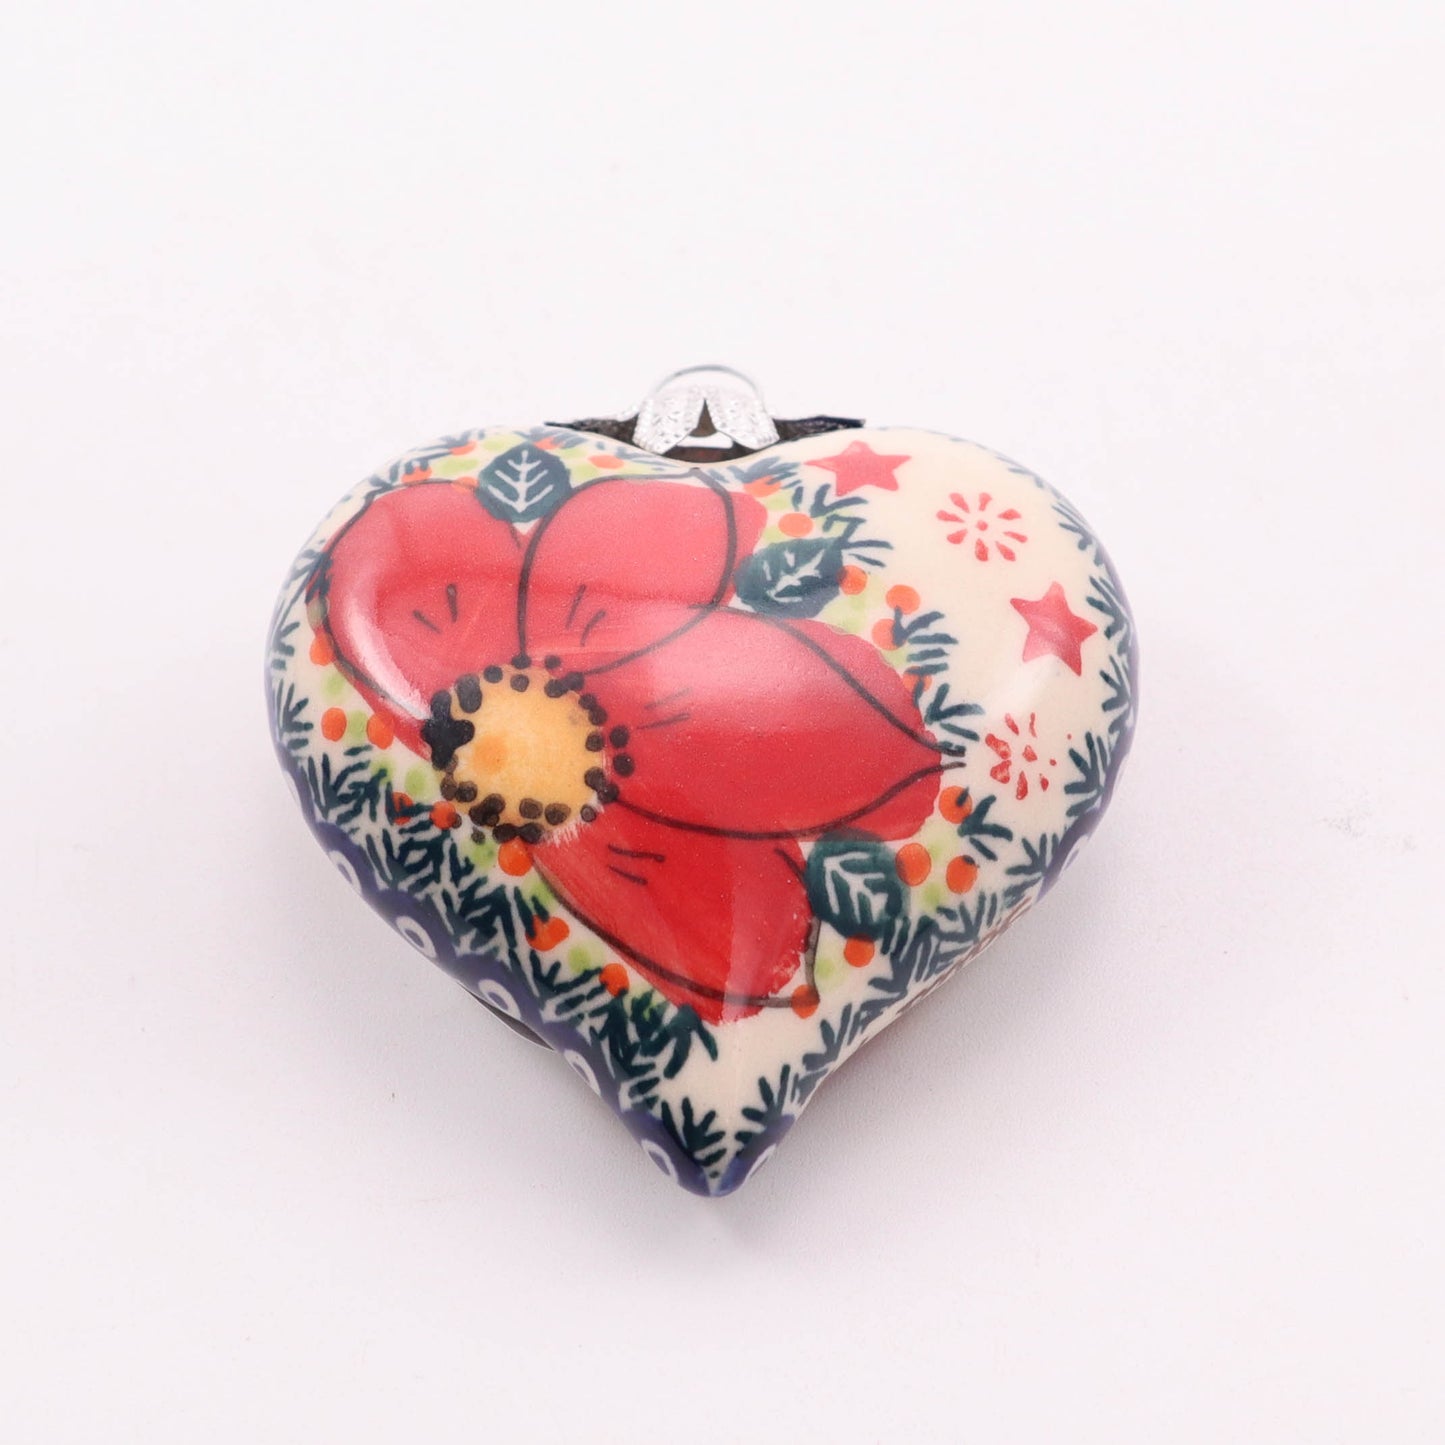 2.5"x2.5" Heart Ornament. Pattern: Poinsettia